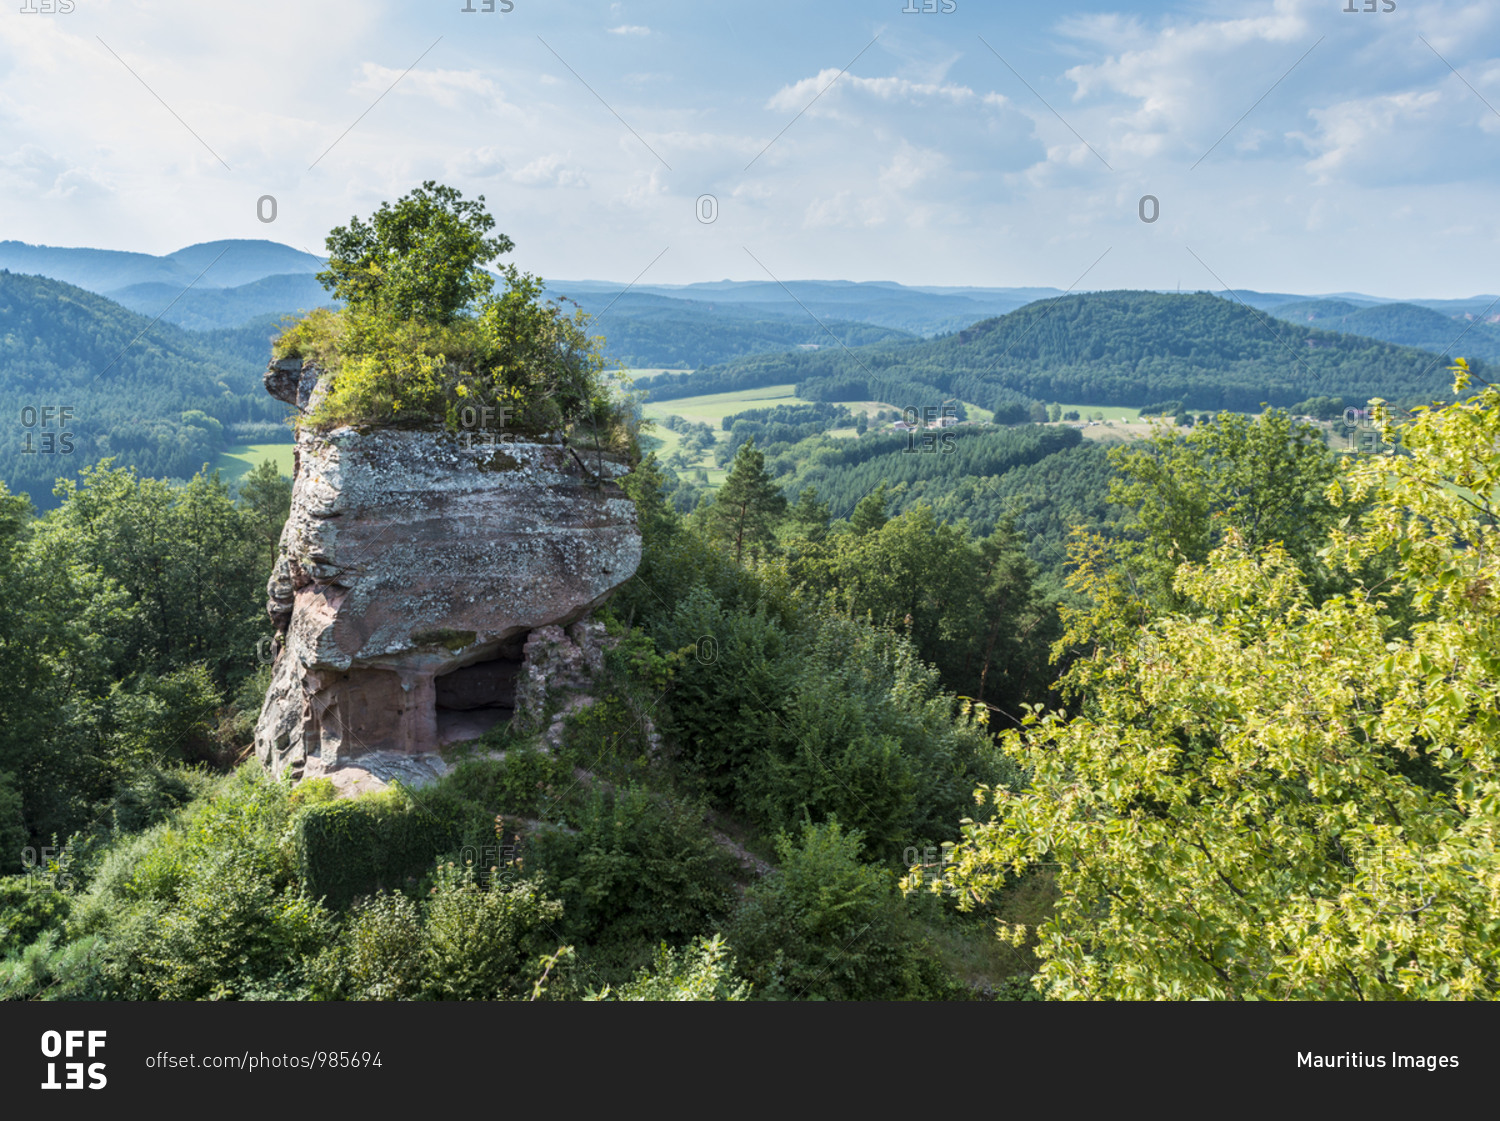 Drachenfels castle ruins, a rock castle carved into the stone